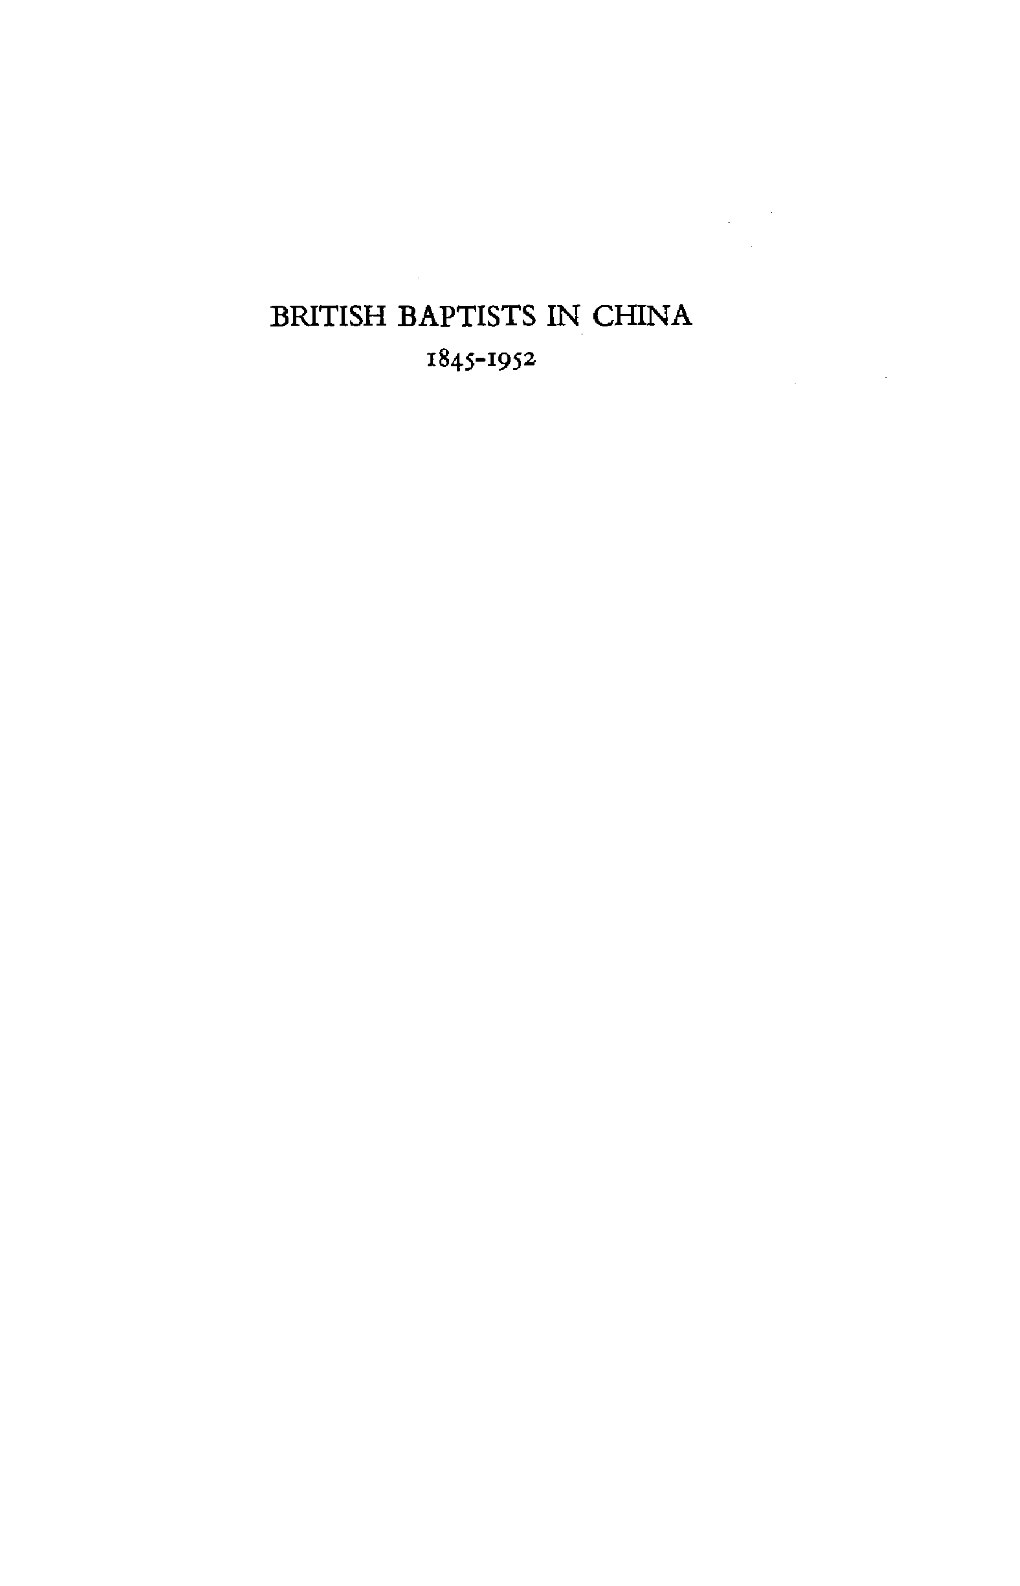 British Baptists in China